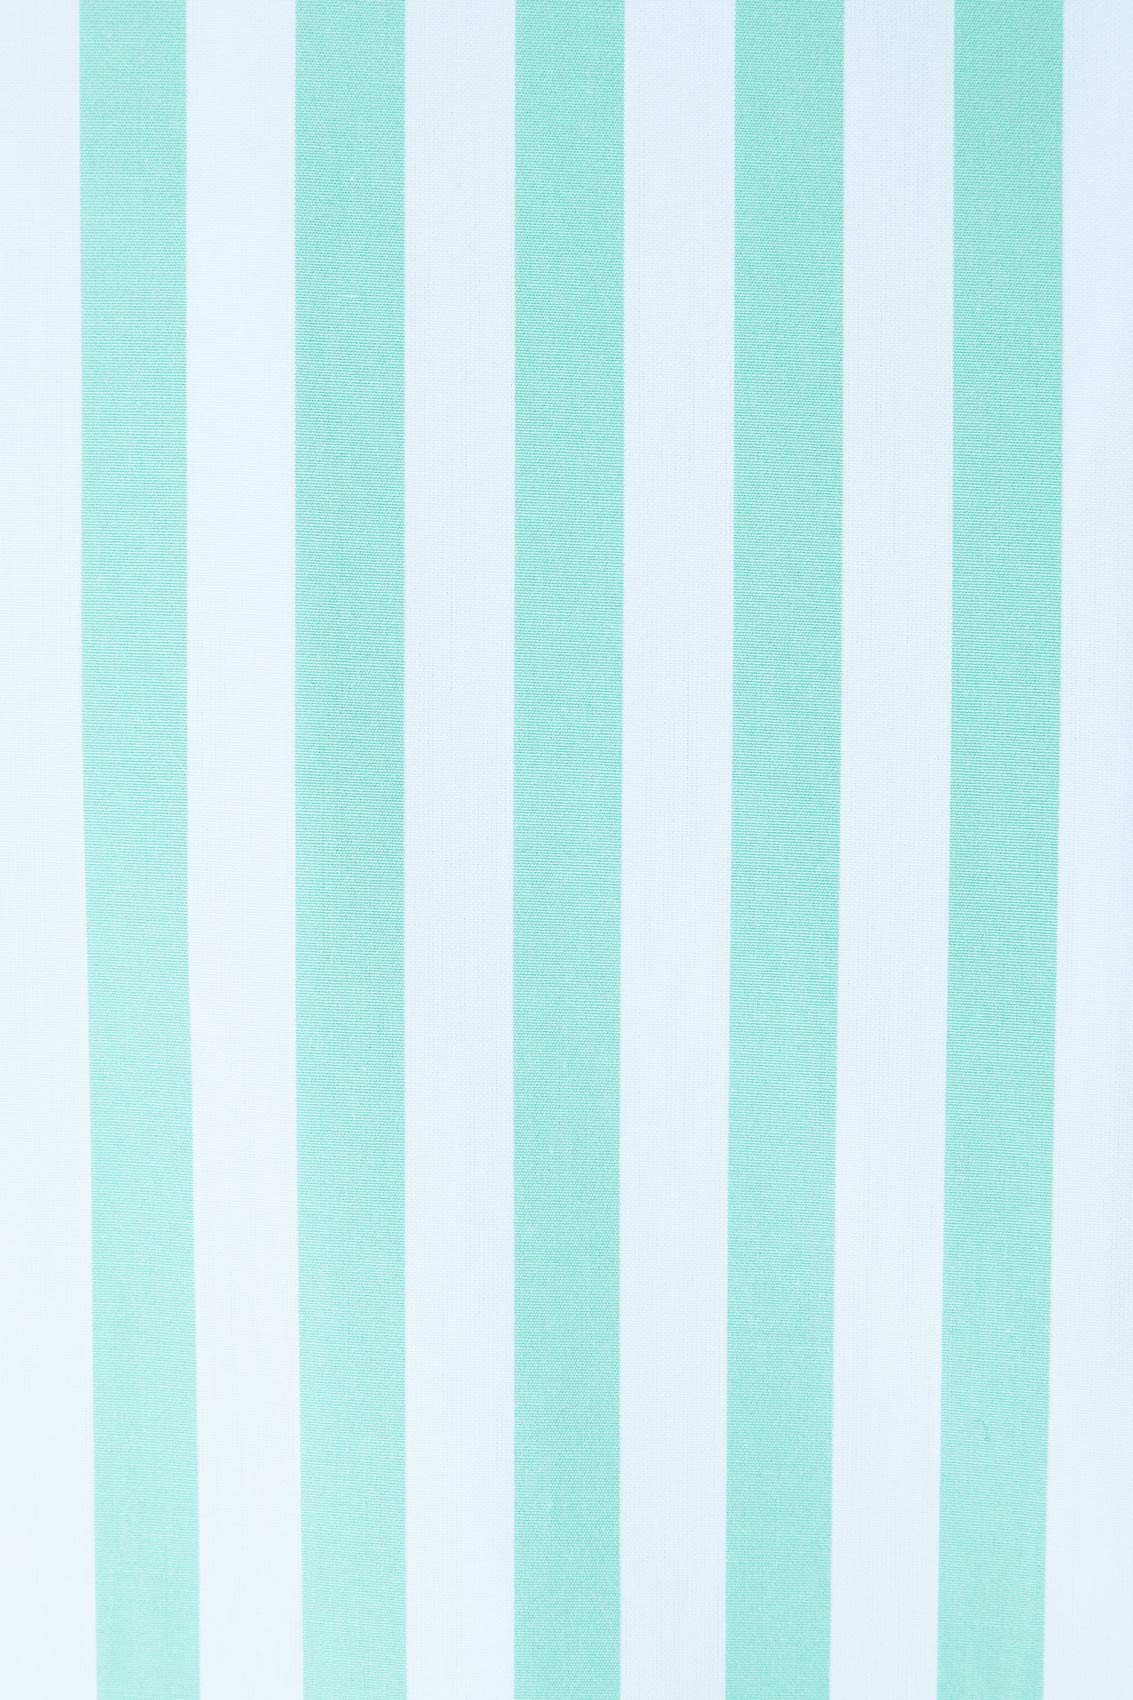 OVER SHIRT / green & azure stripes